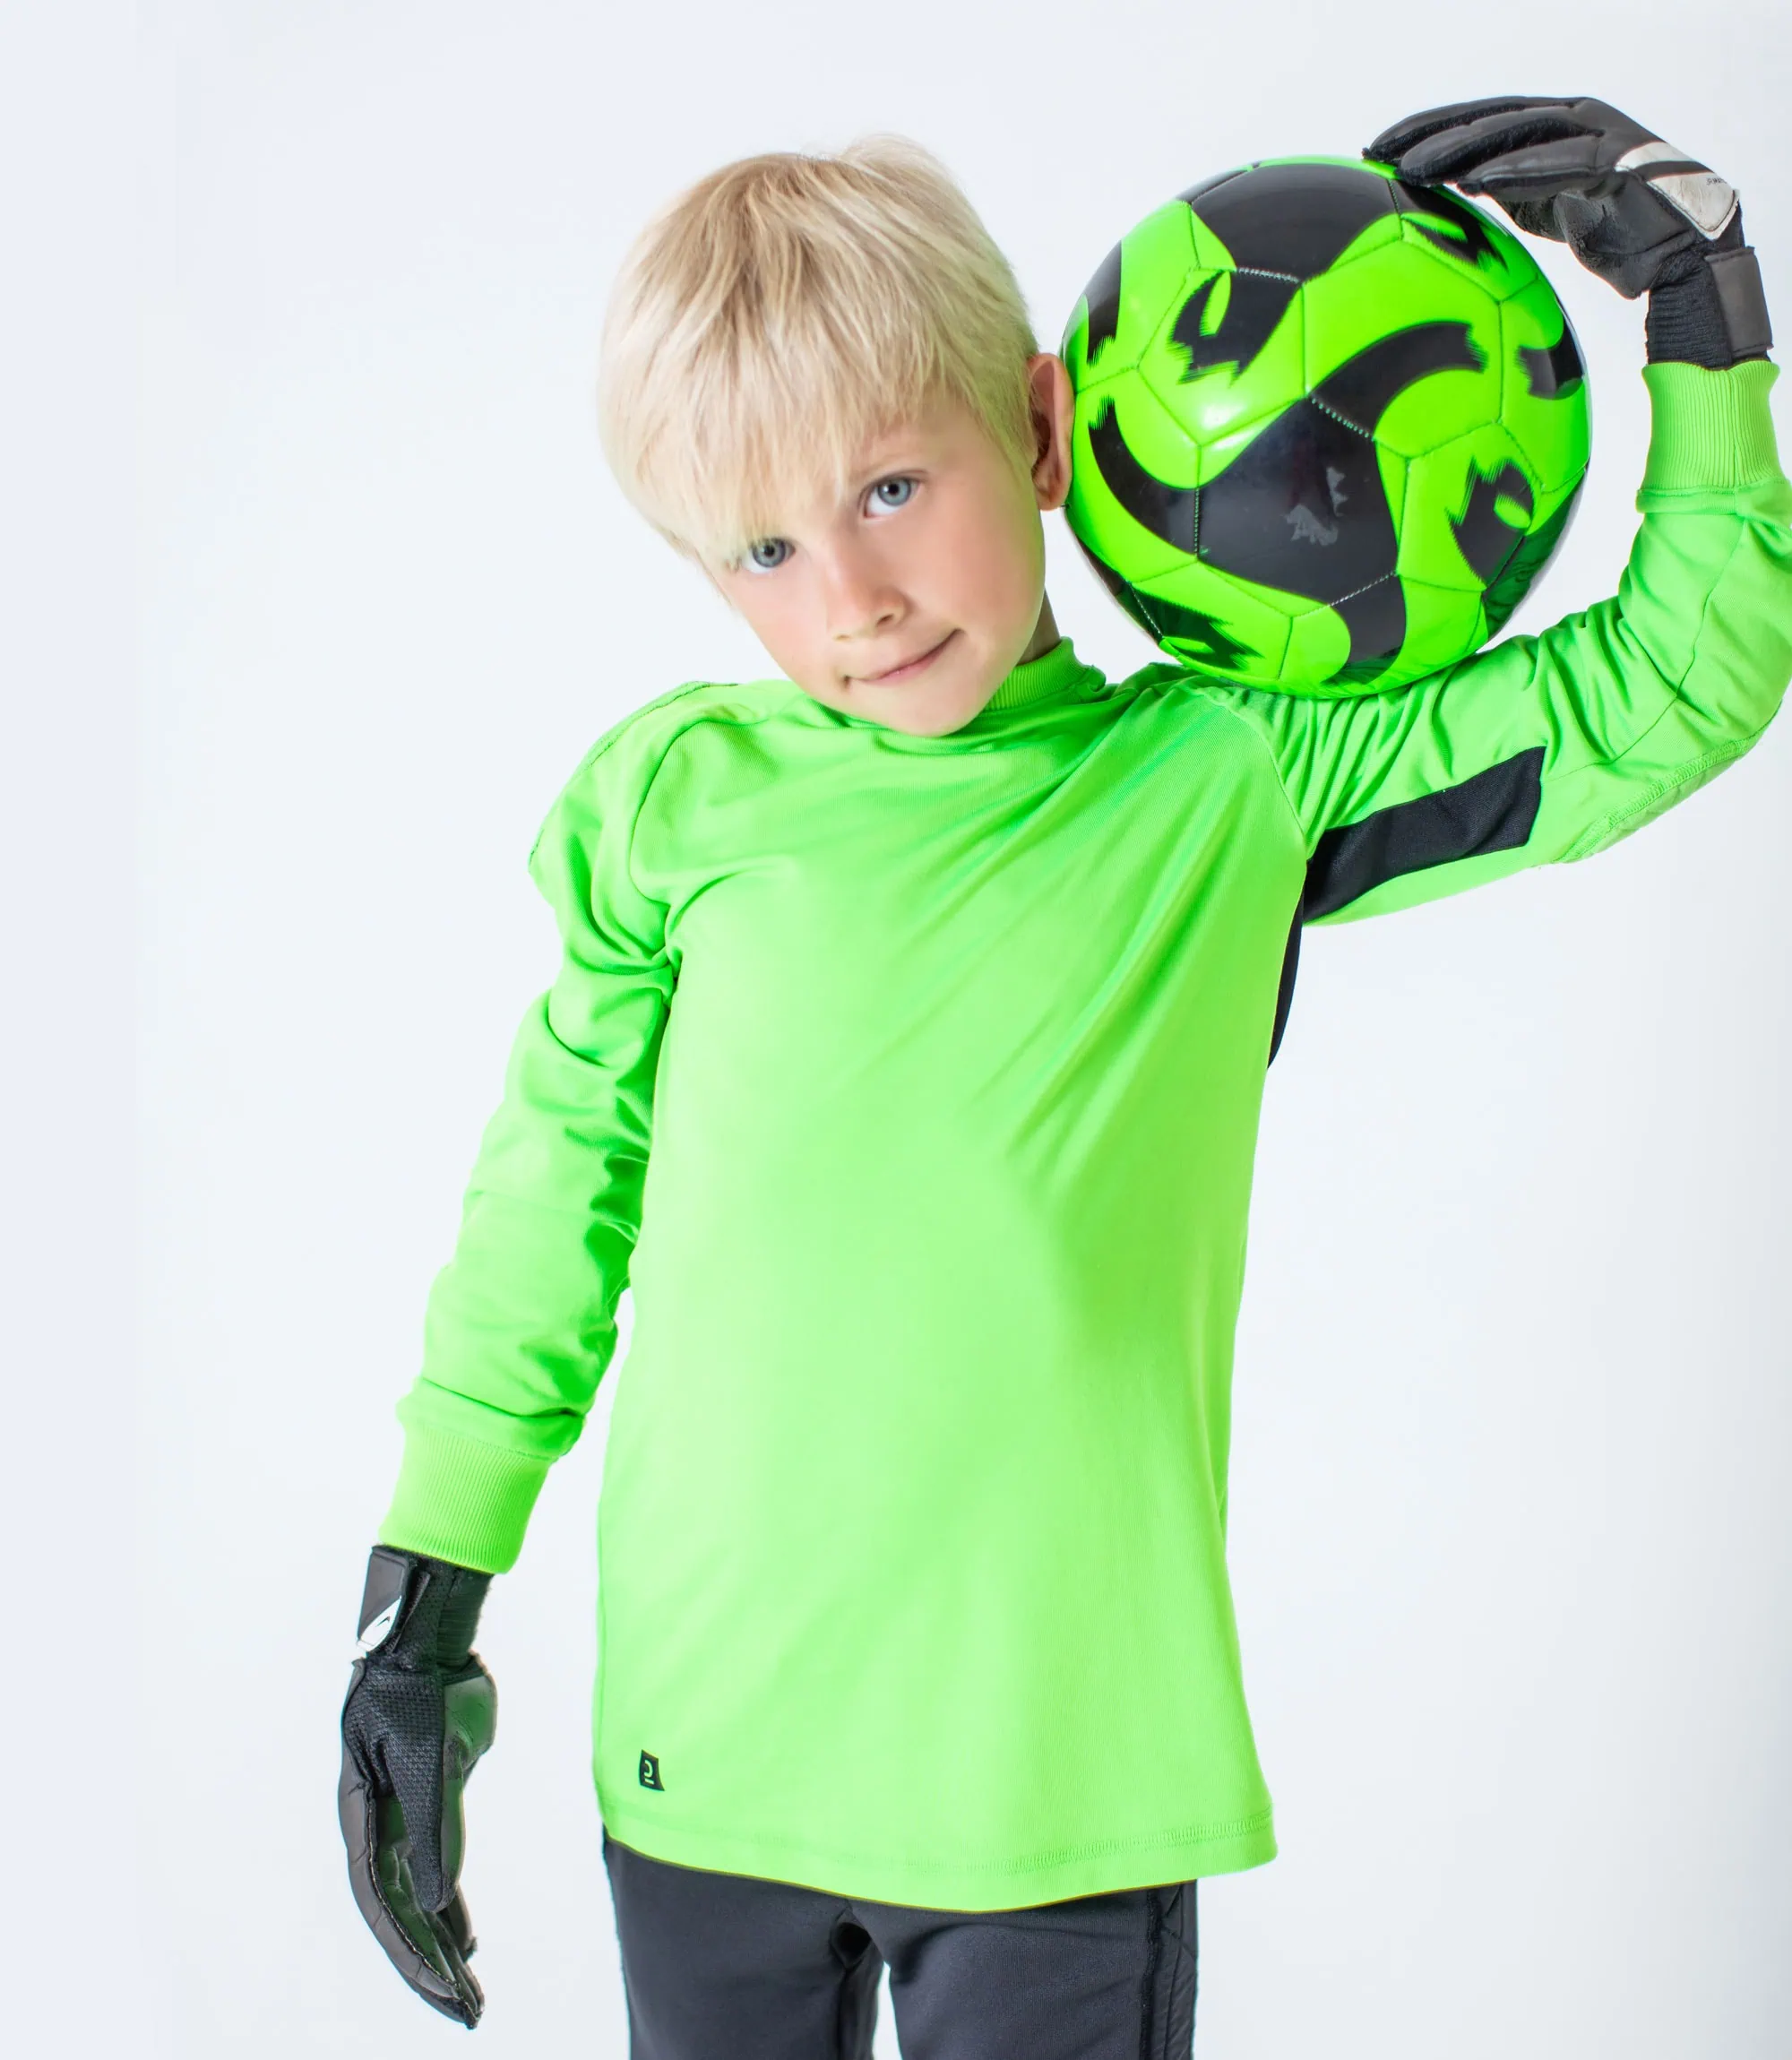 Kindersport: Elias Spielt Fußball Als Torwart // Himbeer